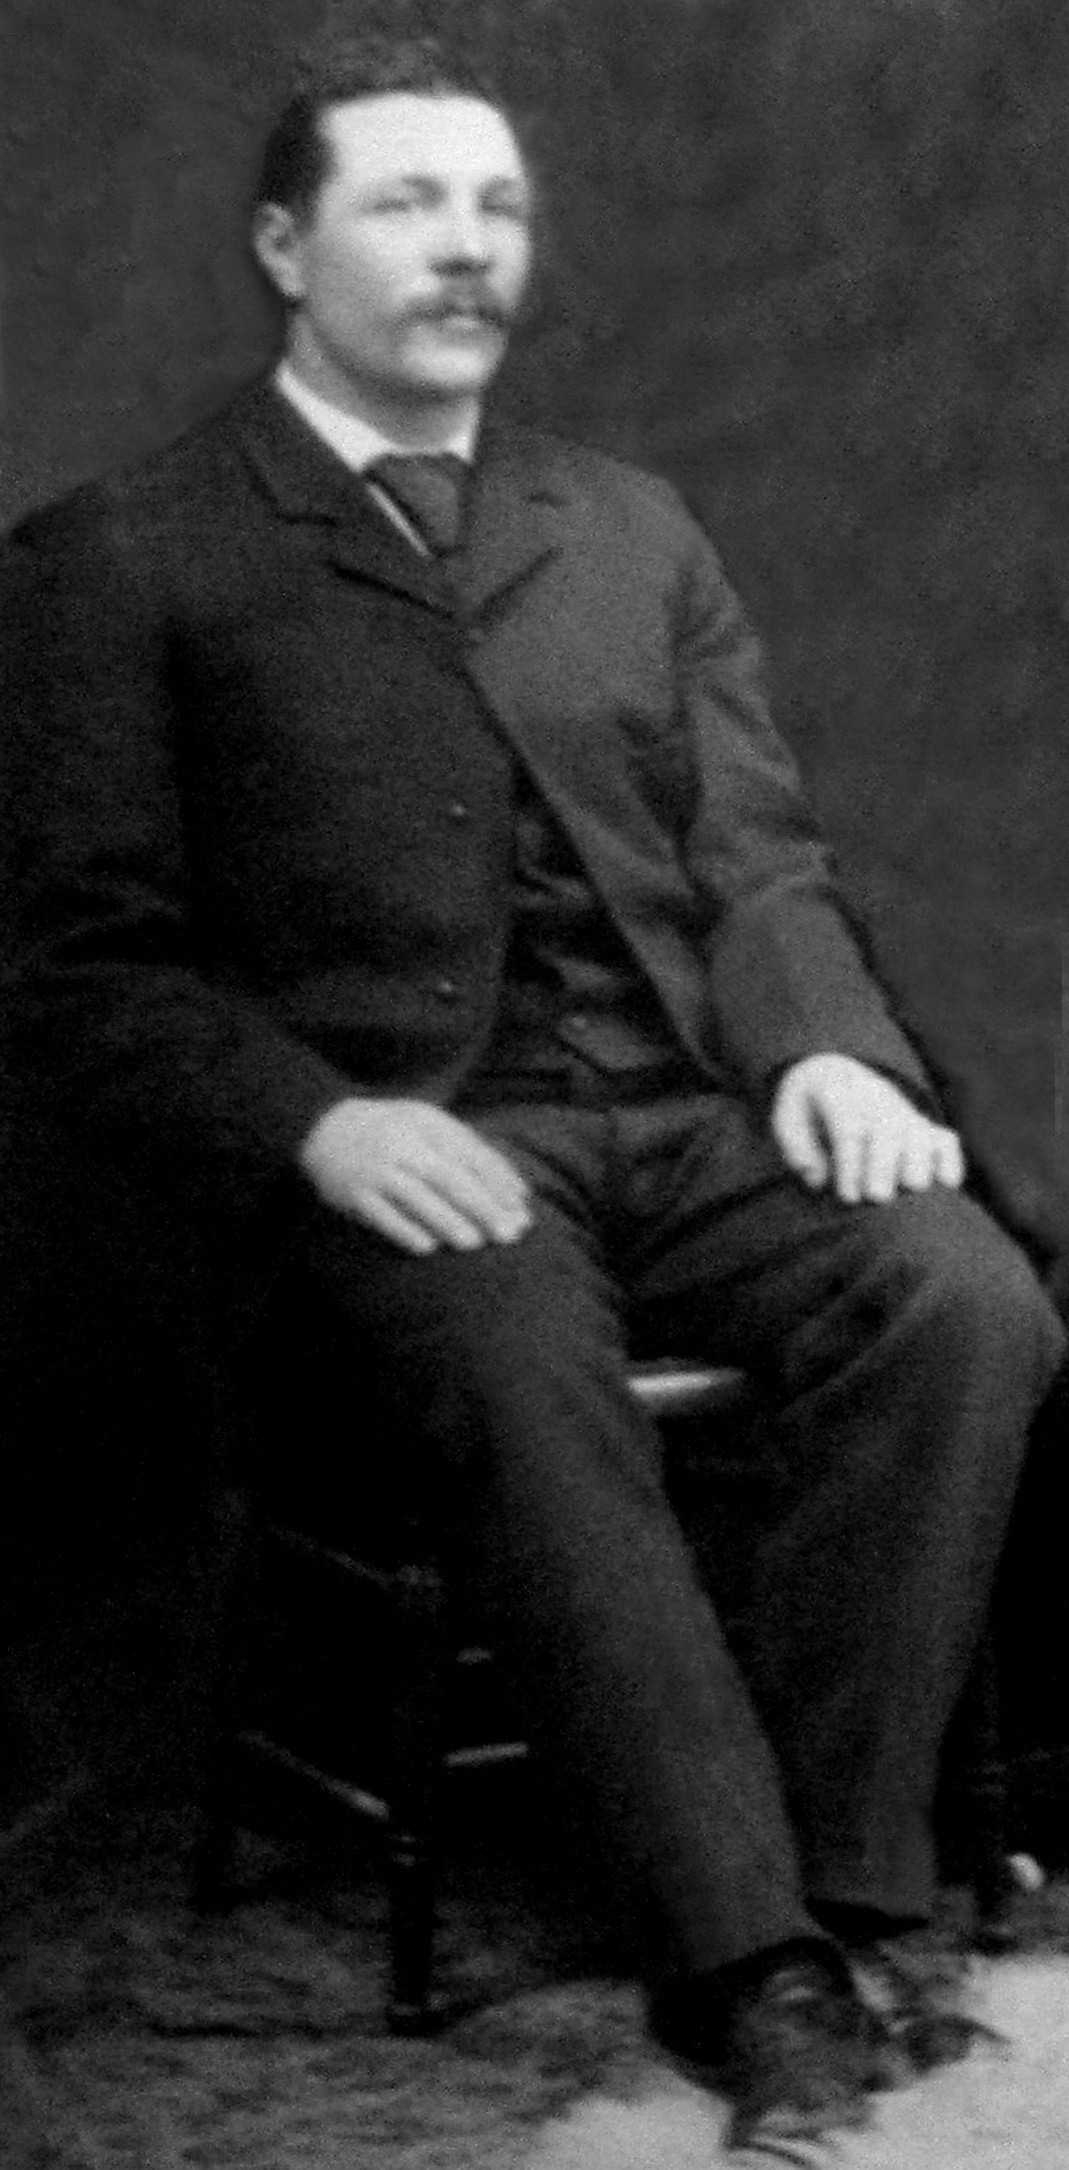 William Madison McVicker